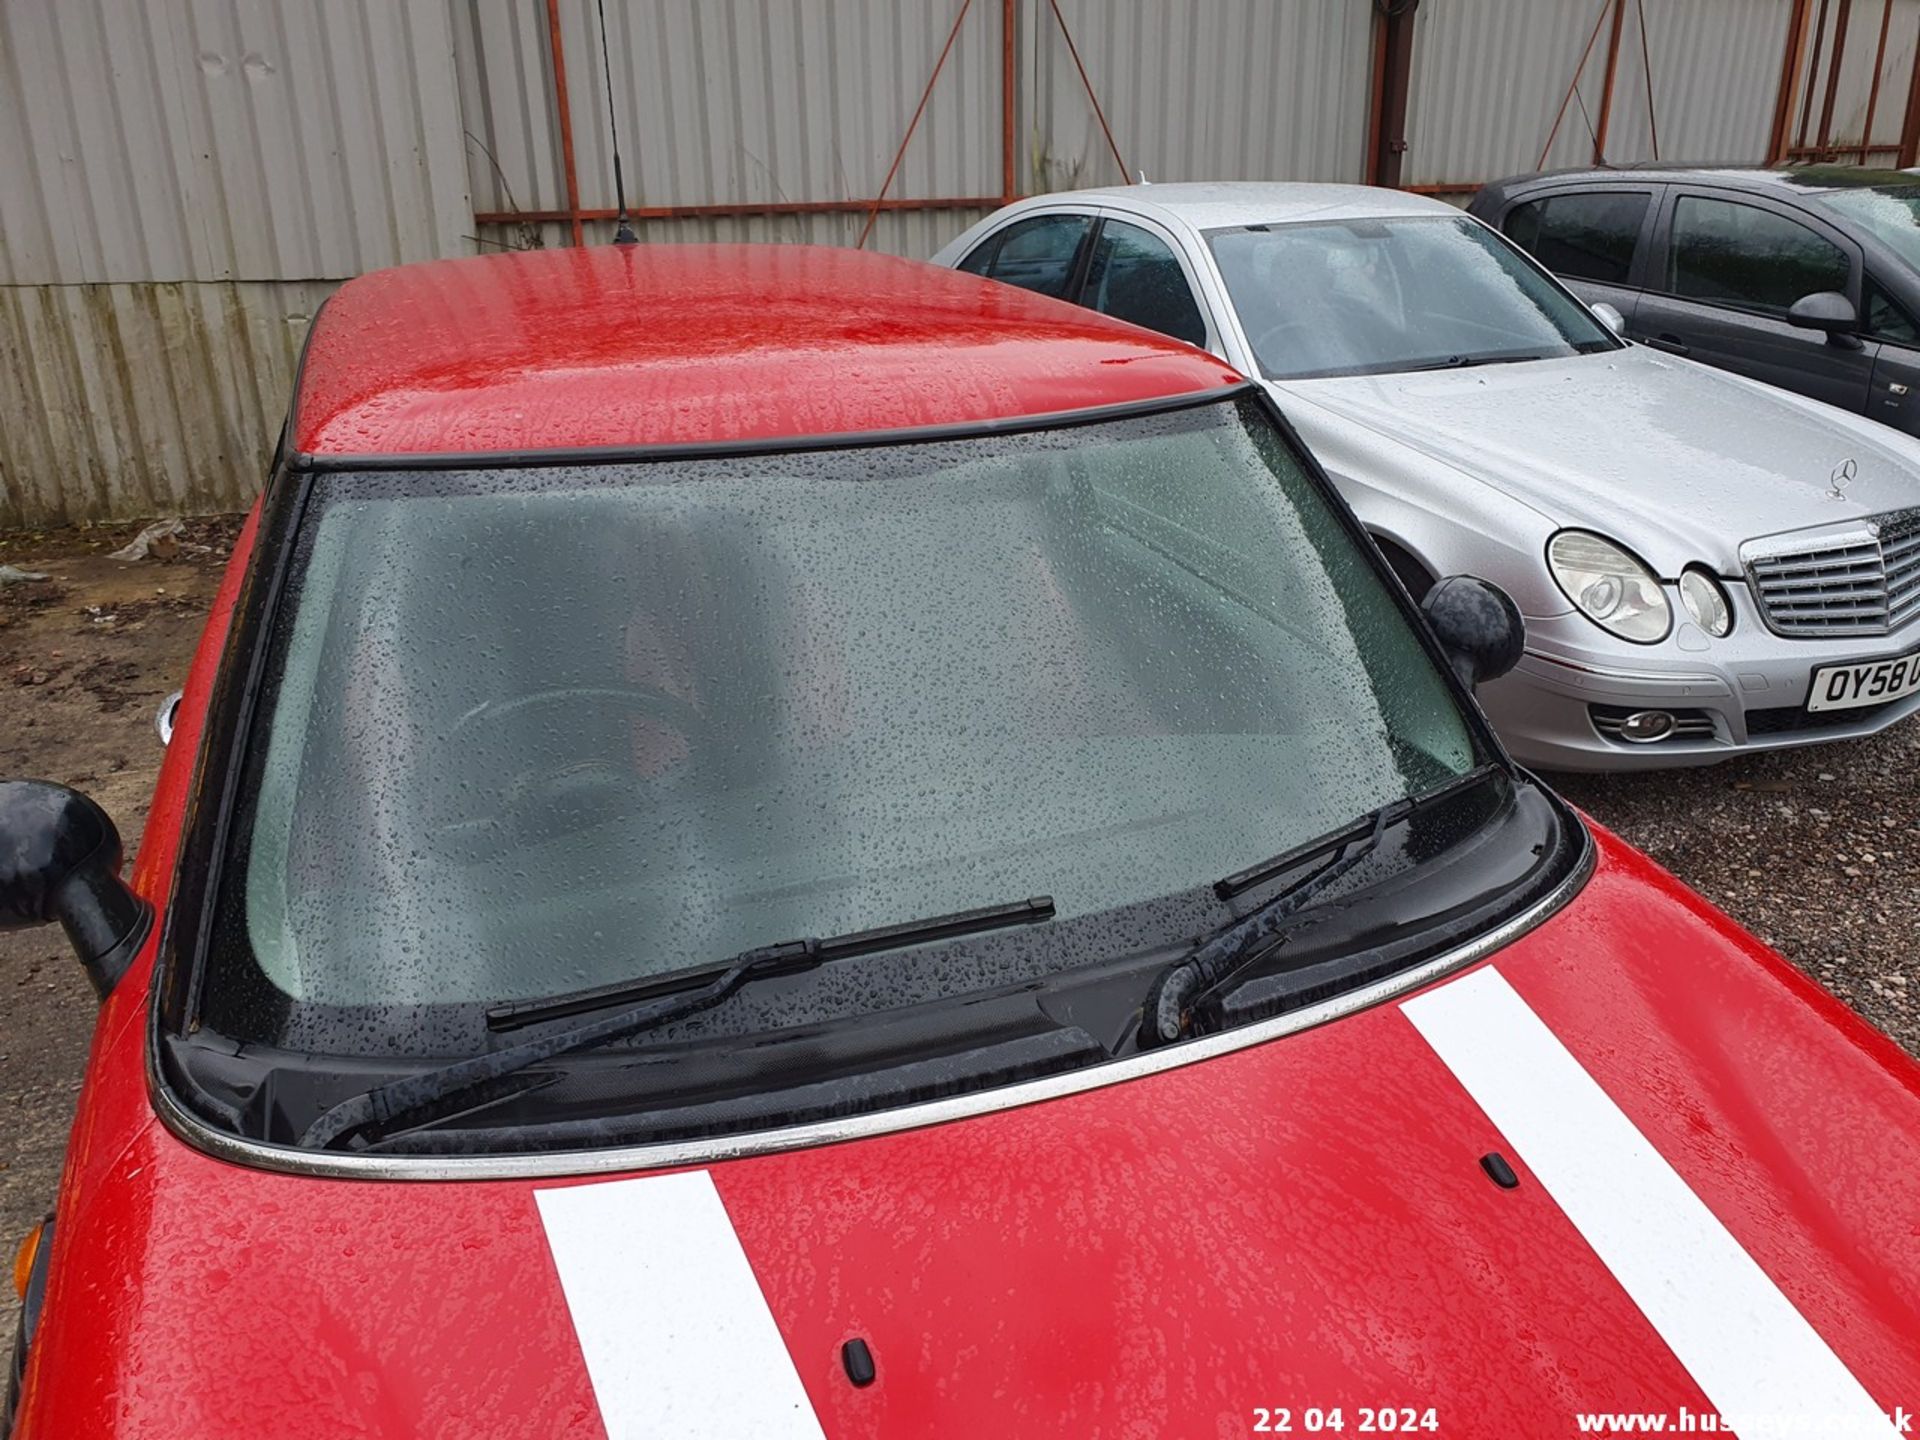 07/07 MINI ONE - 1397cc 3dr Hatchback (Red, 86k) - Image 27 of 47